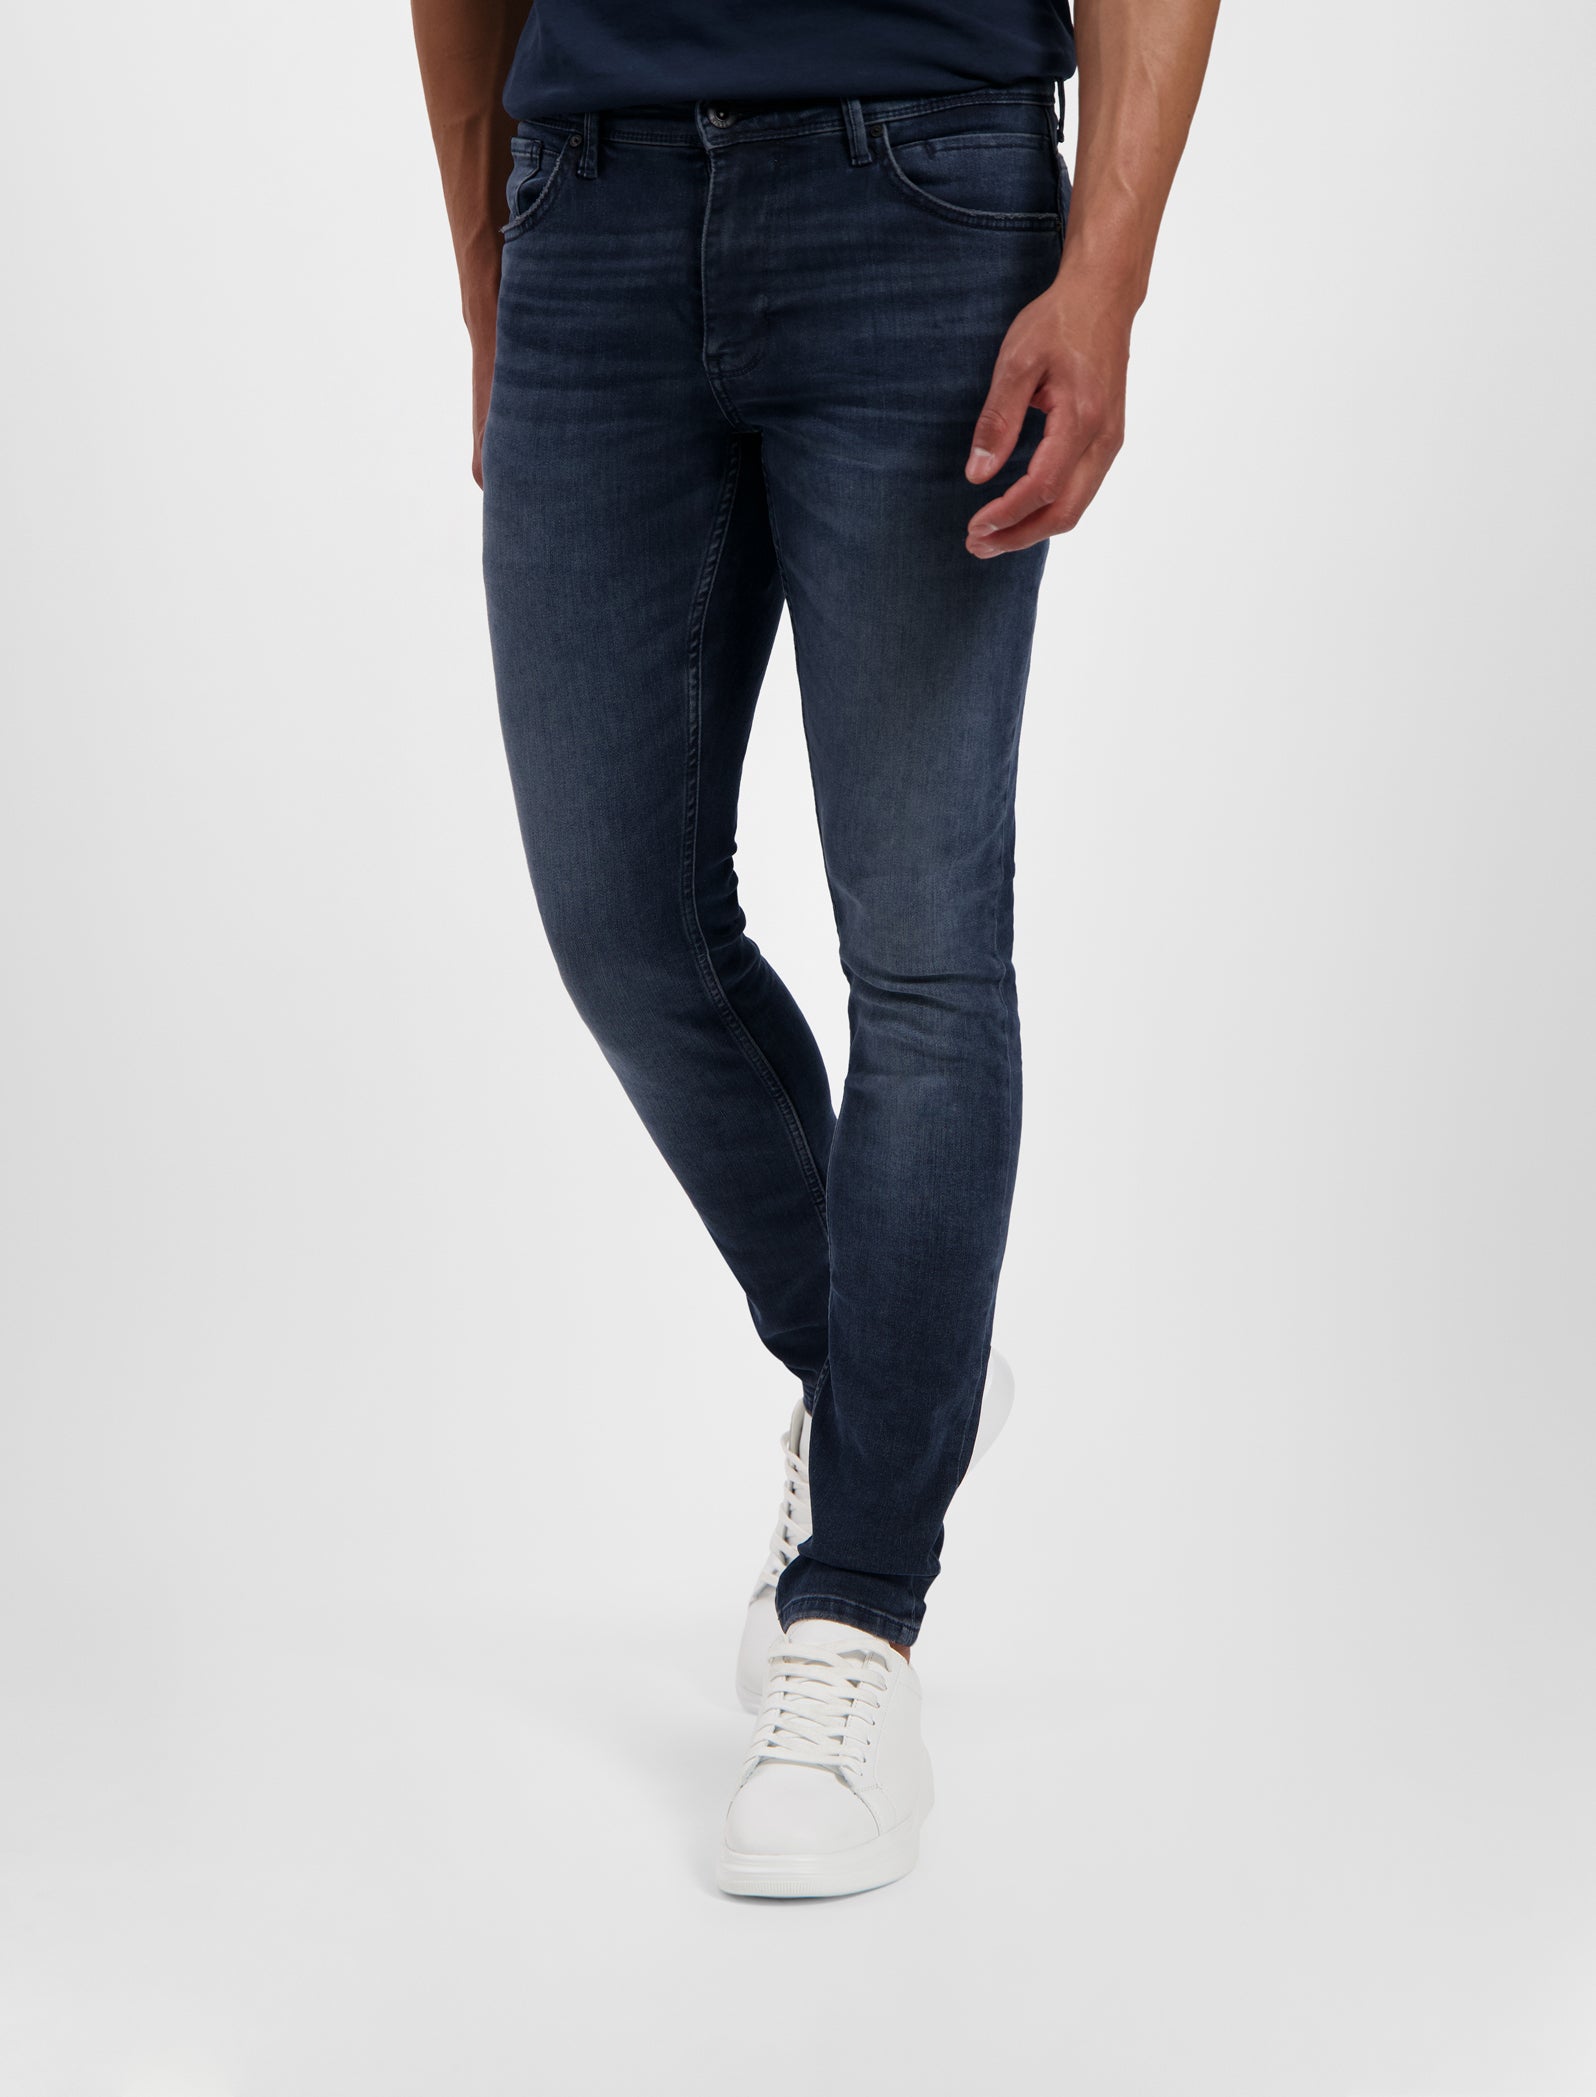 Purewhite Jeans The Jone W1122